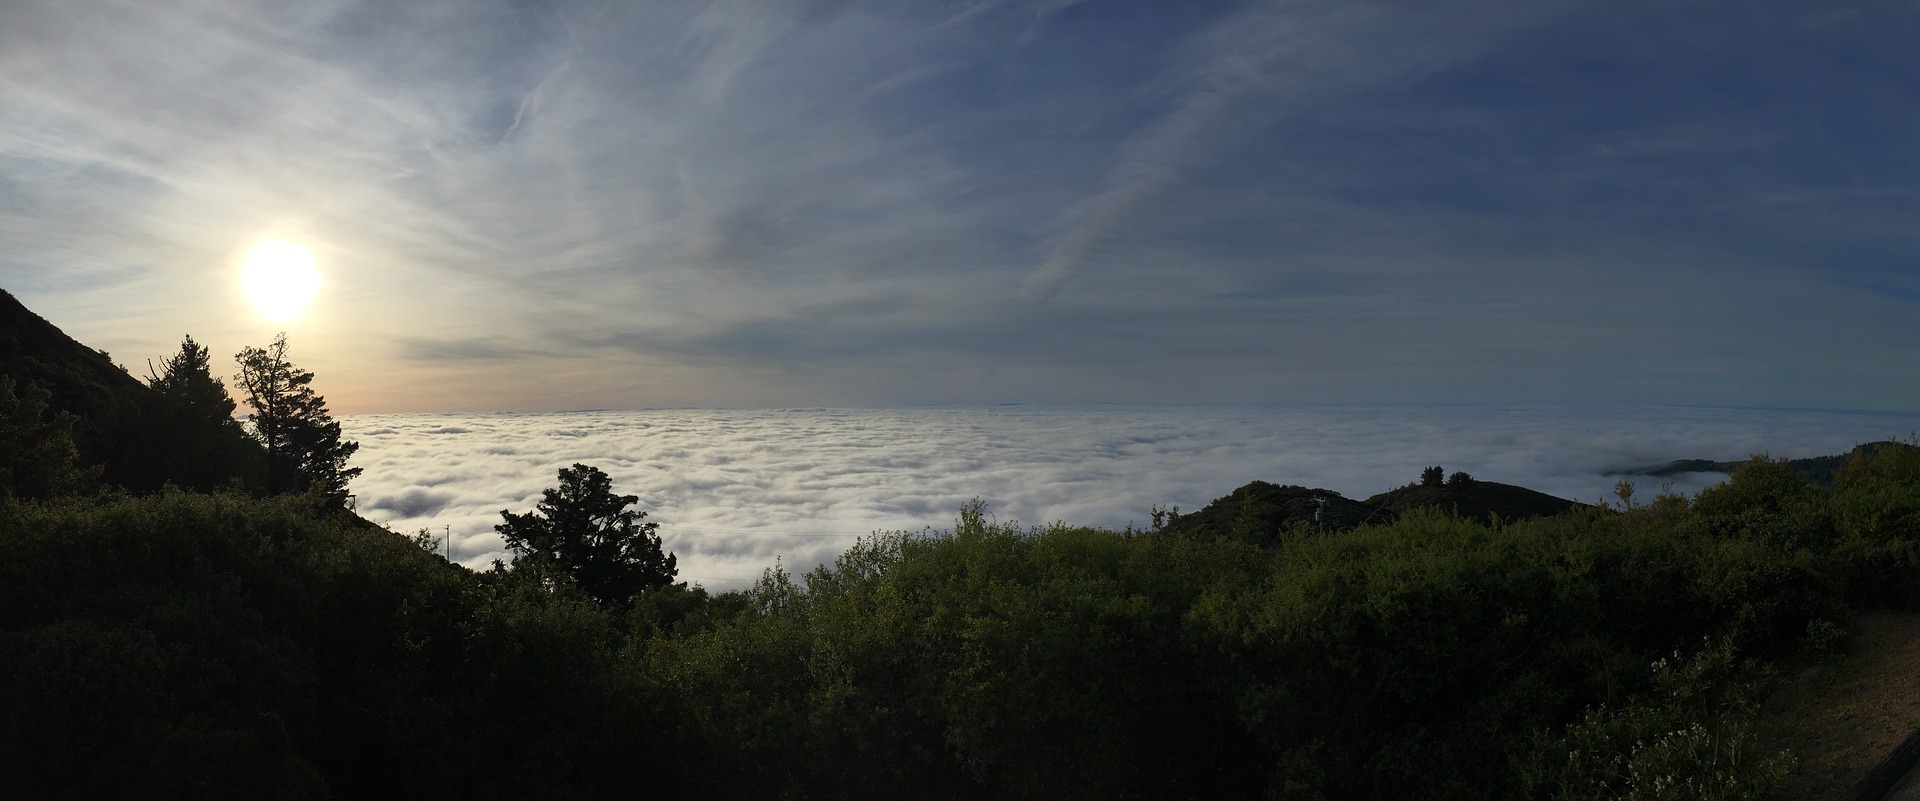 Best Bay Area Mountain Biking Trails Above the fog Mount Tamalpais 